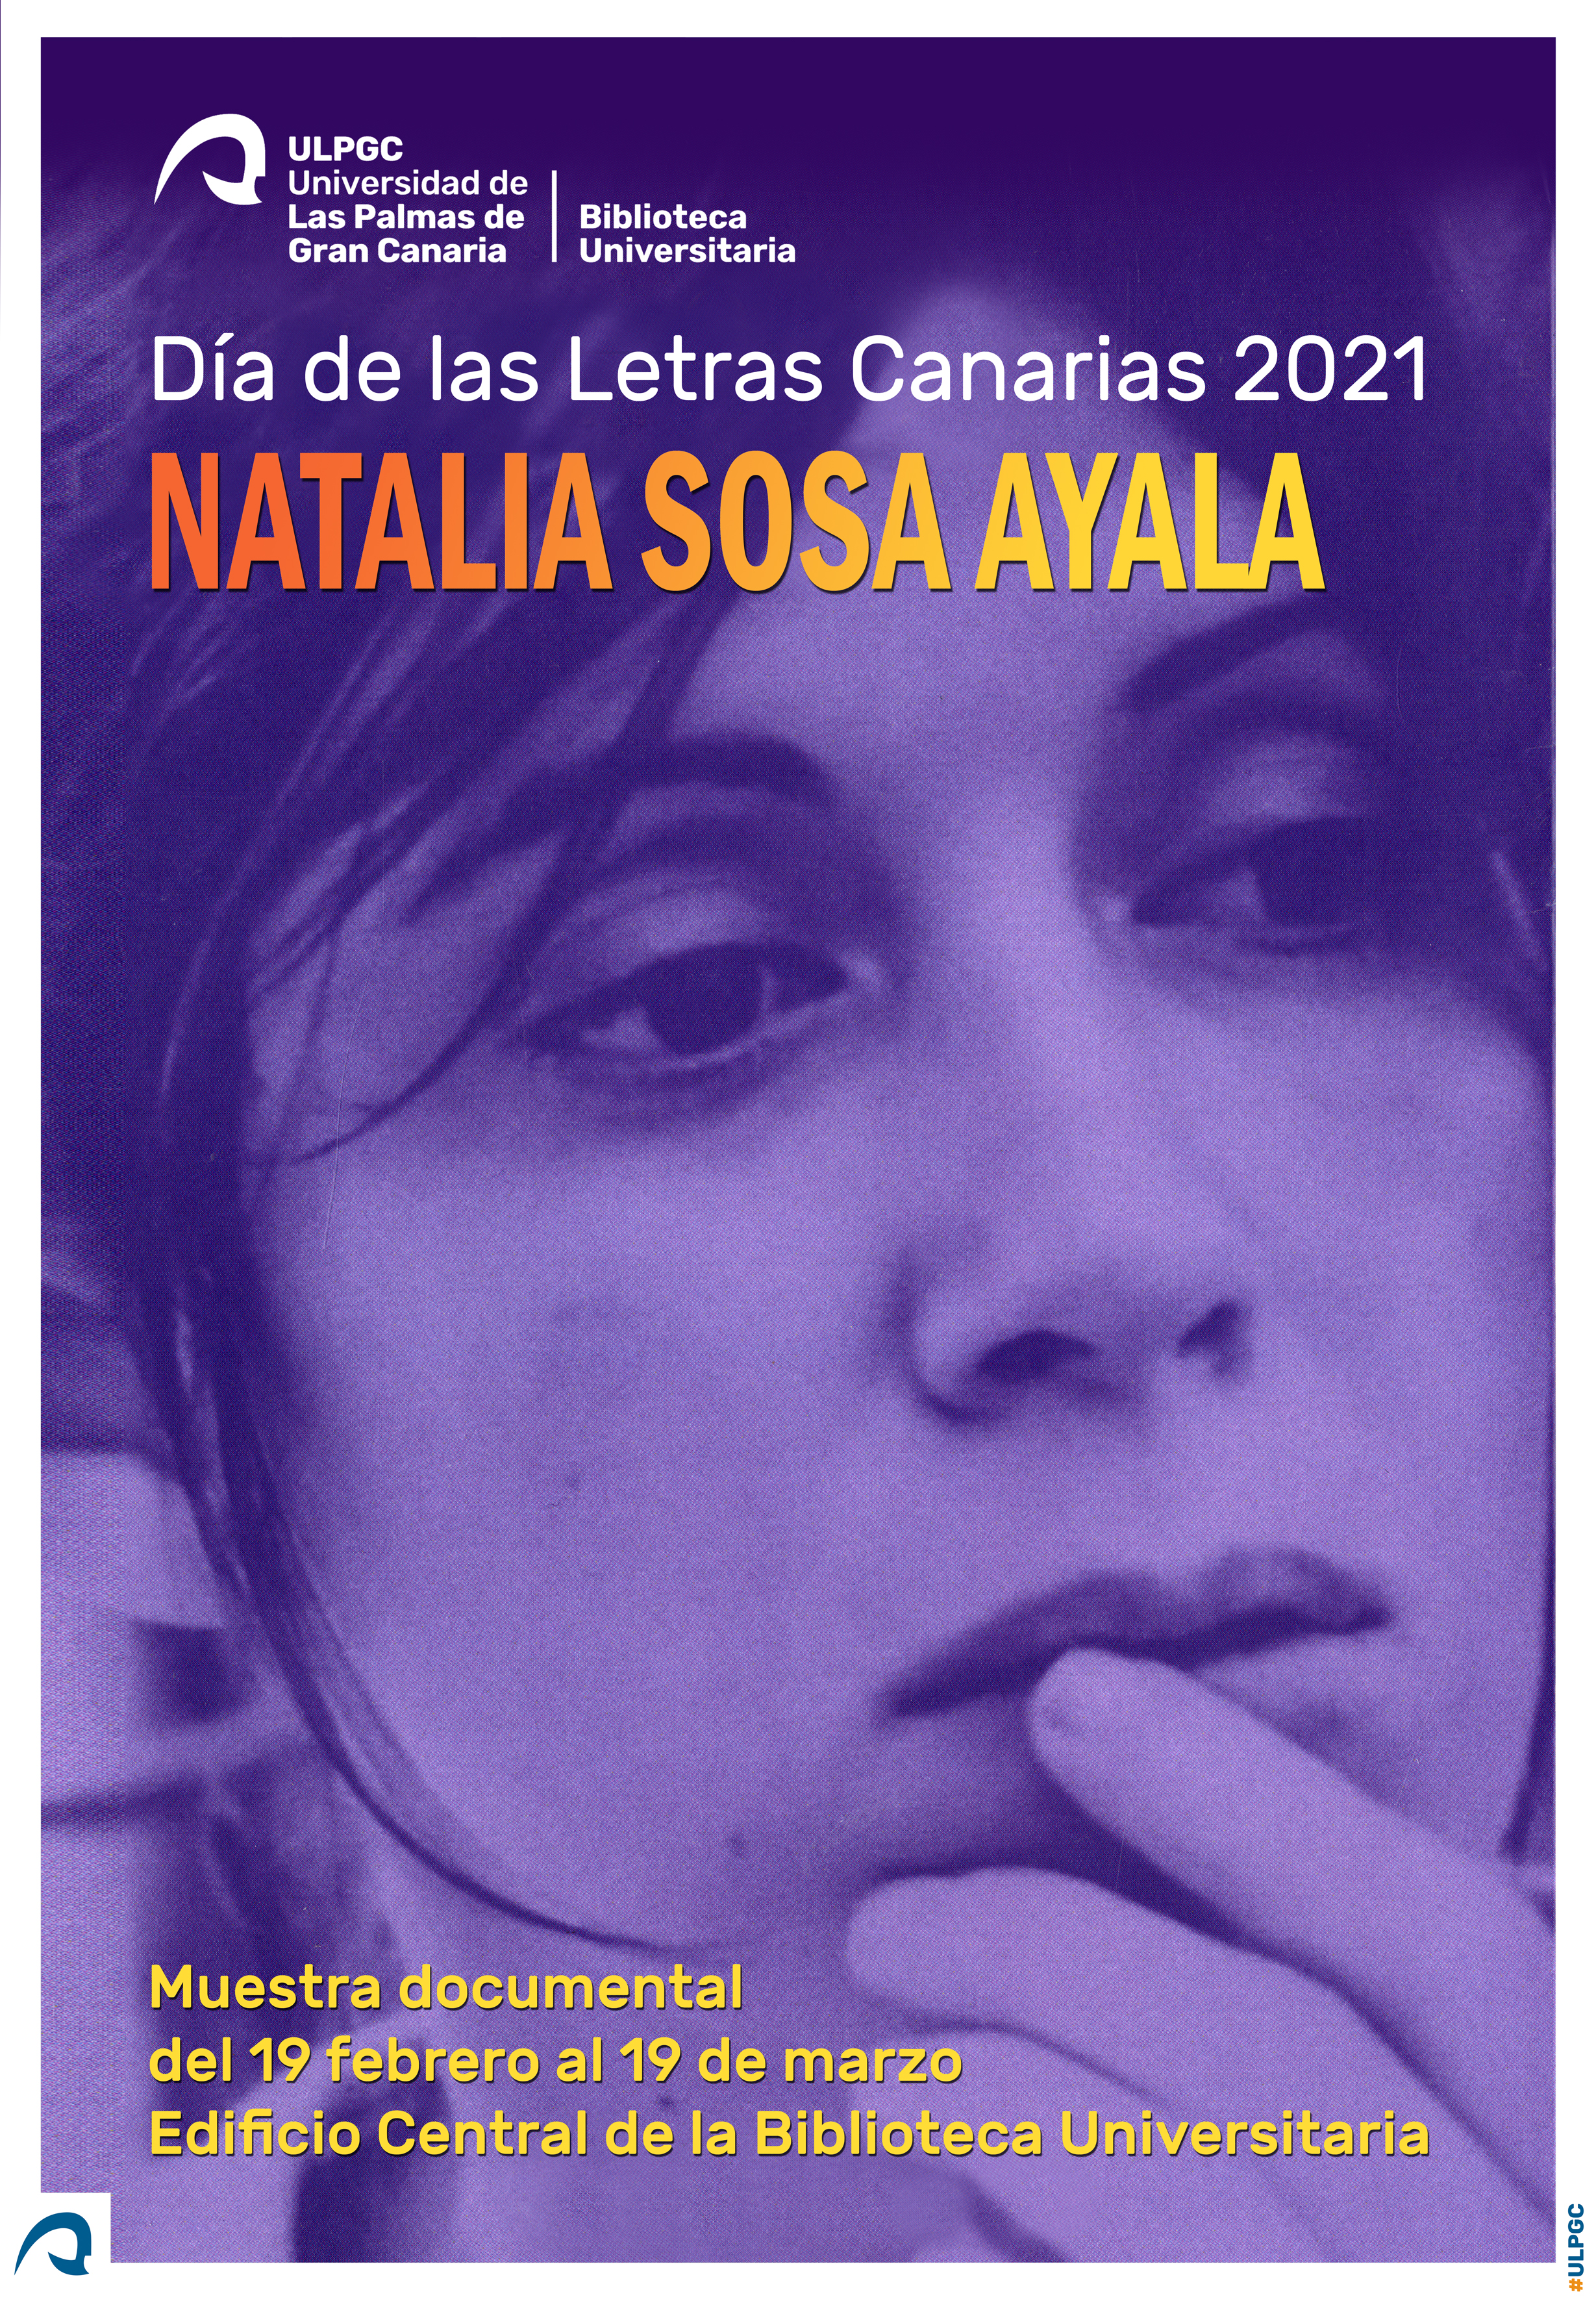 Cartel con rostro de Natalia Sosa